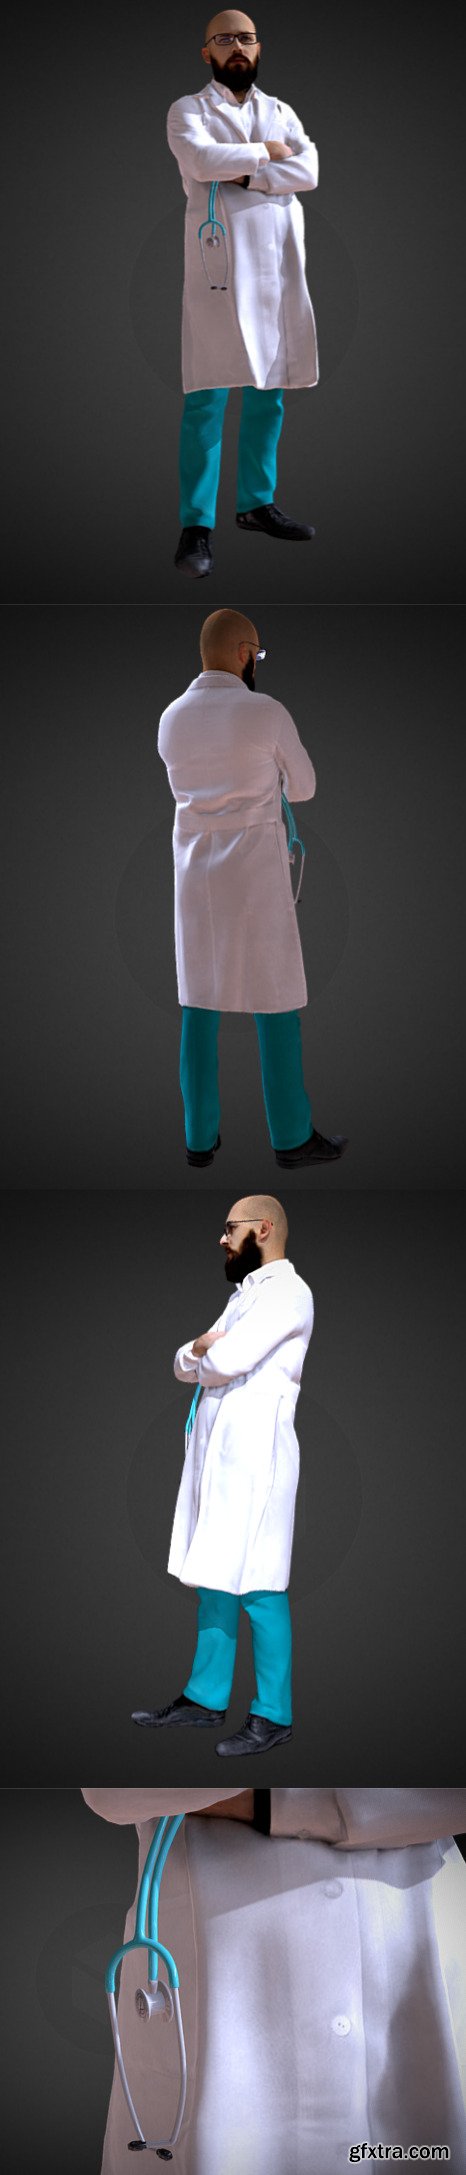 3D Scan Man Doctor 026